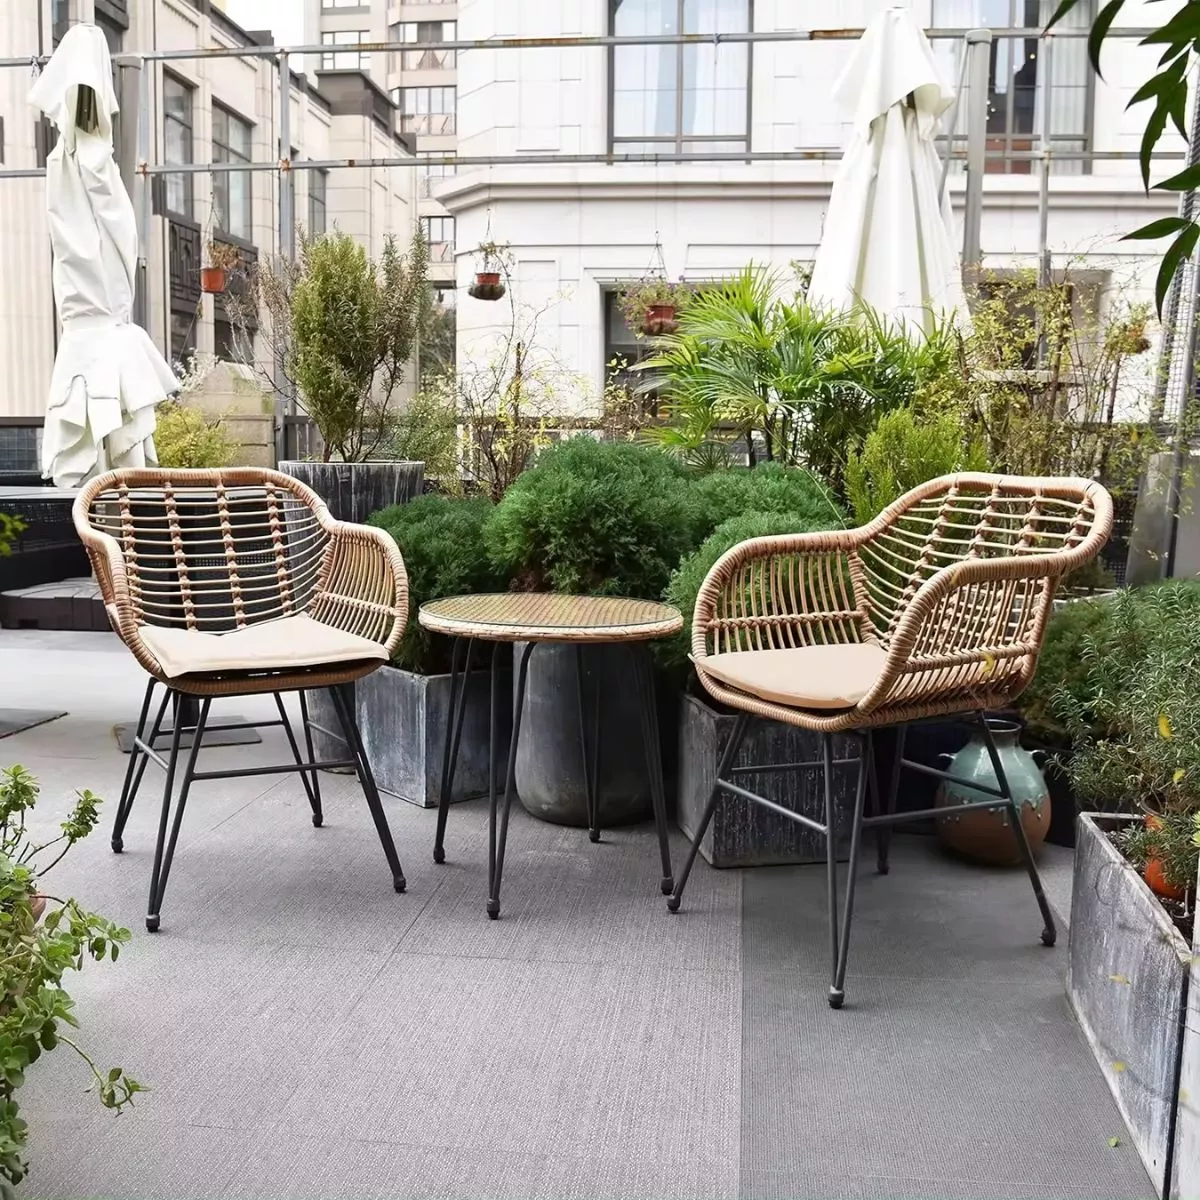 Set pentru terasa cu 2 scaune si o masuta, maro/negru, din metal si polipropilena stil bambus
 2